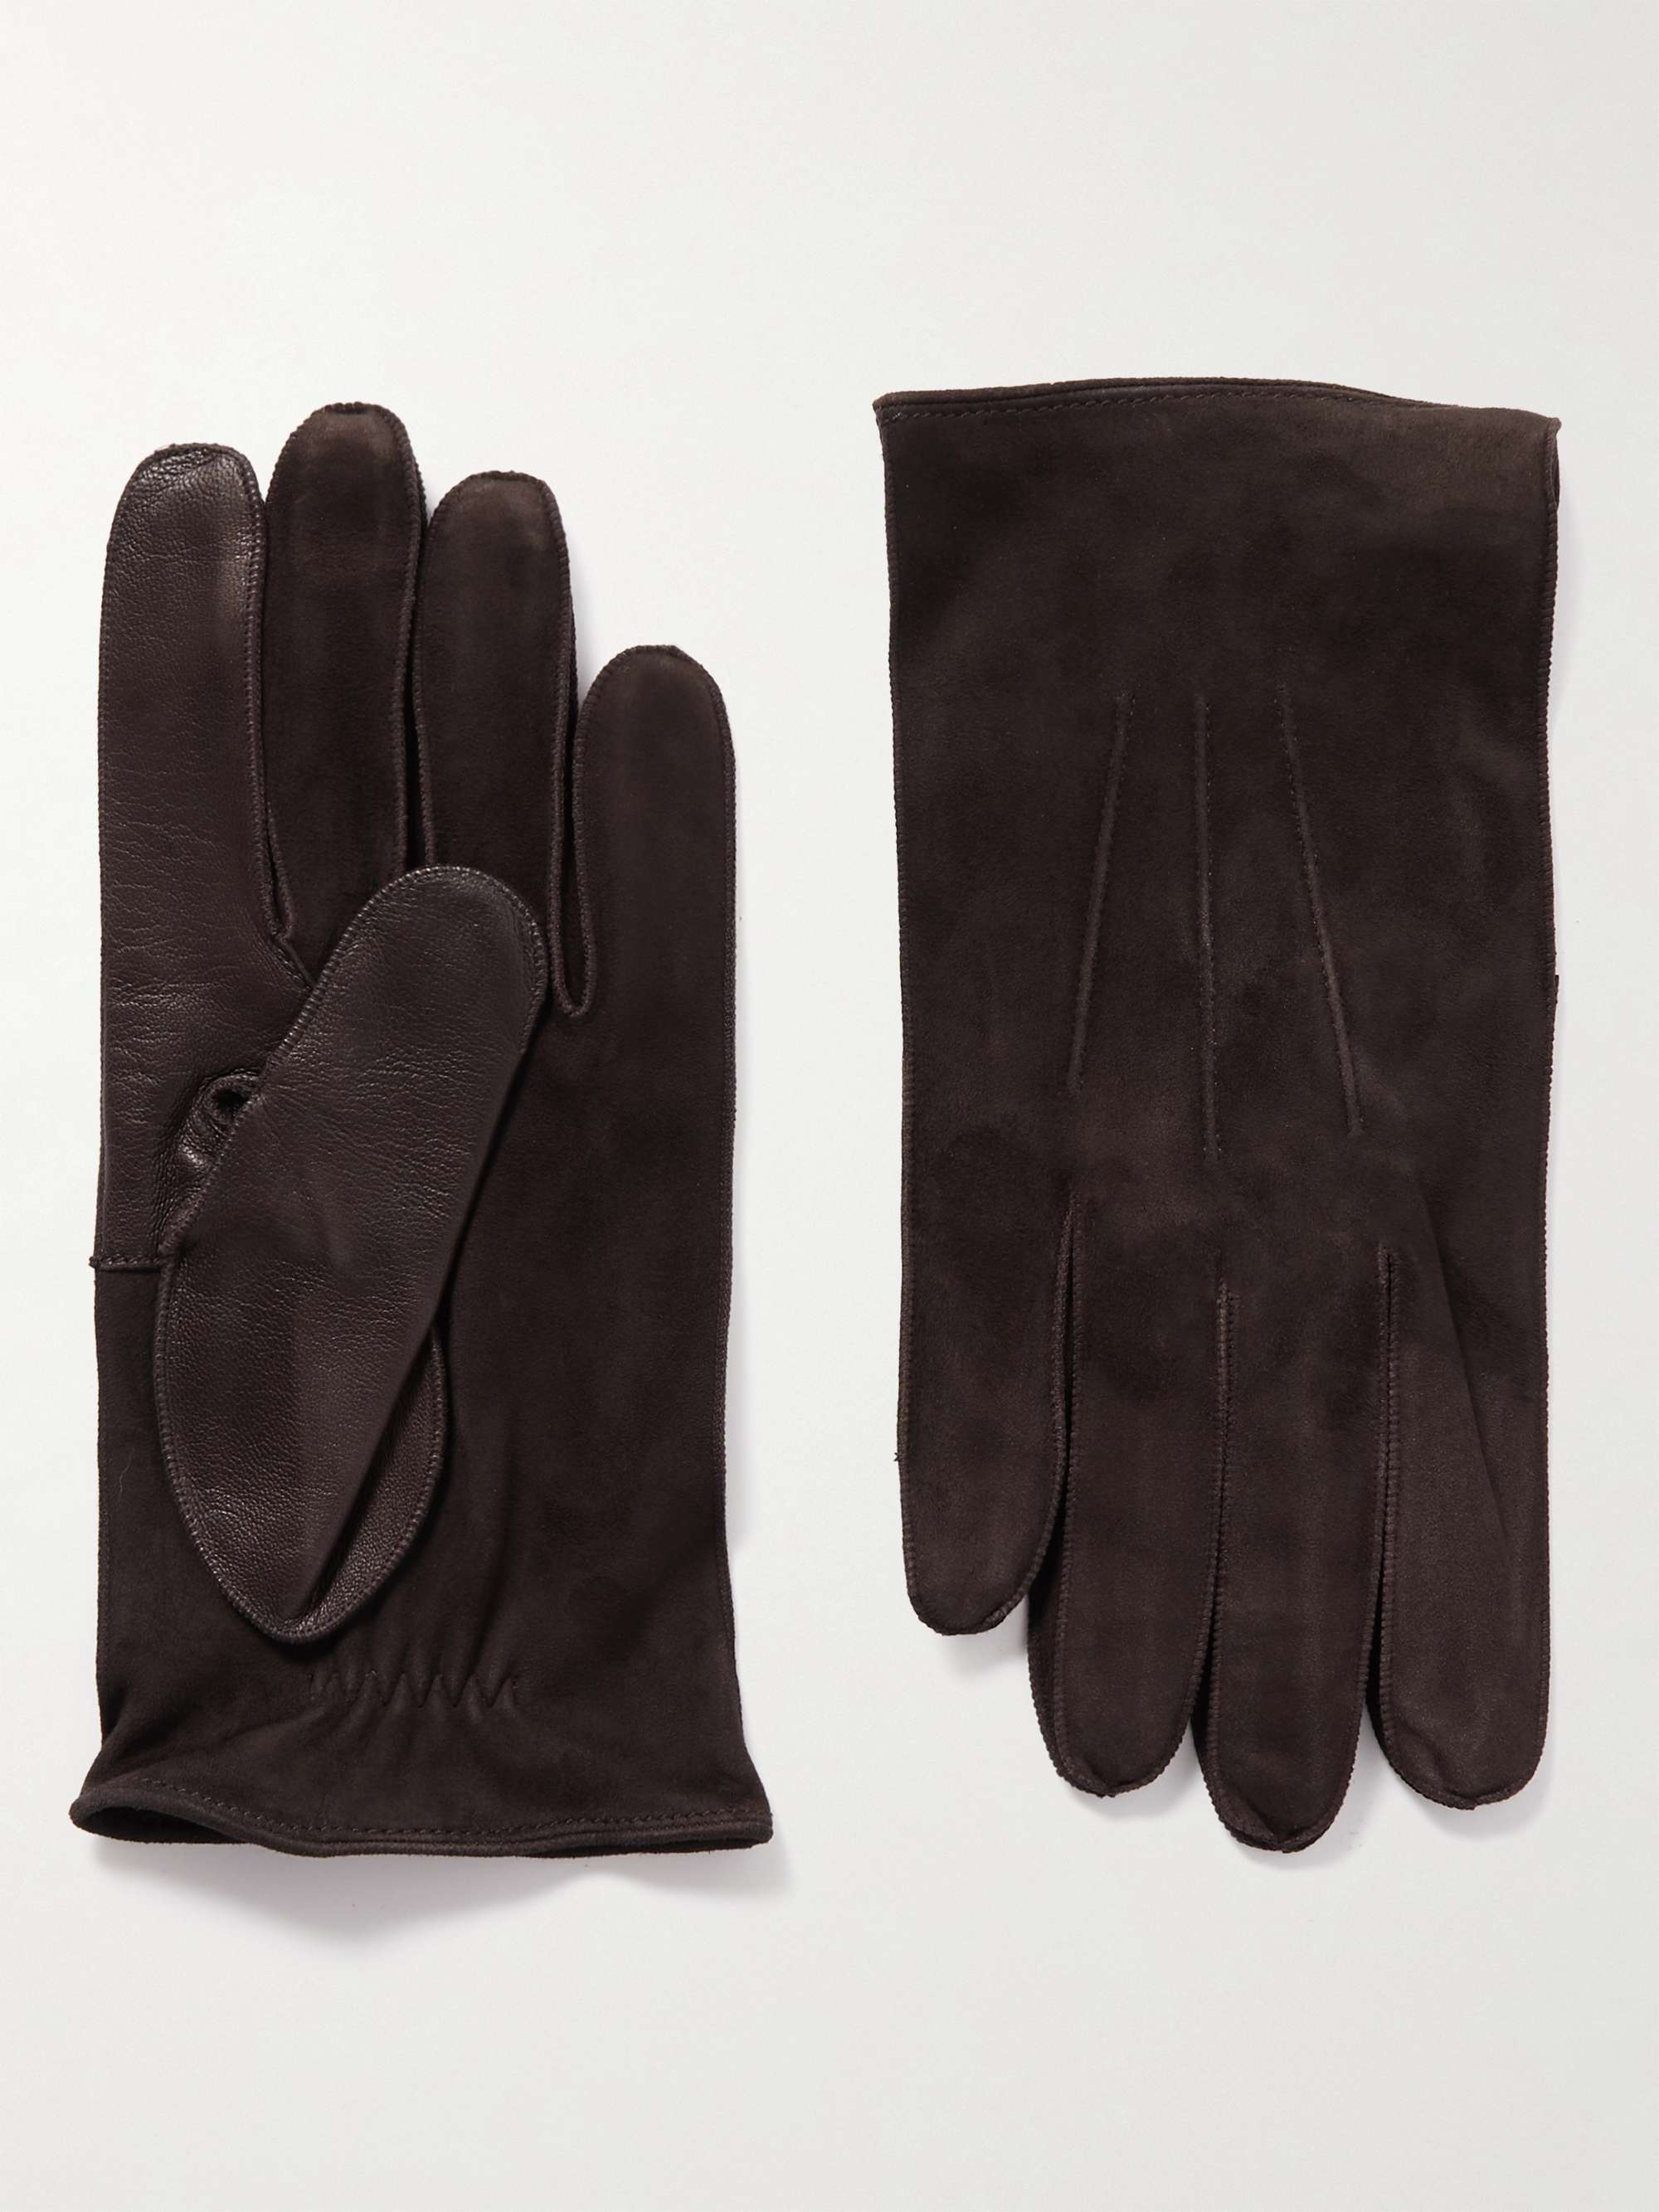 ZEGNA Leather-Trimmed Suede Gloves